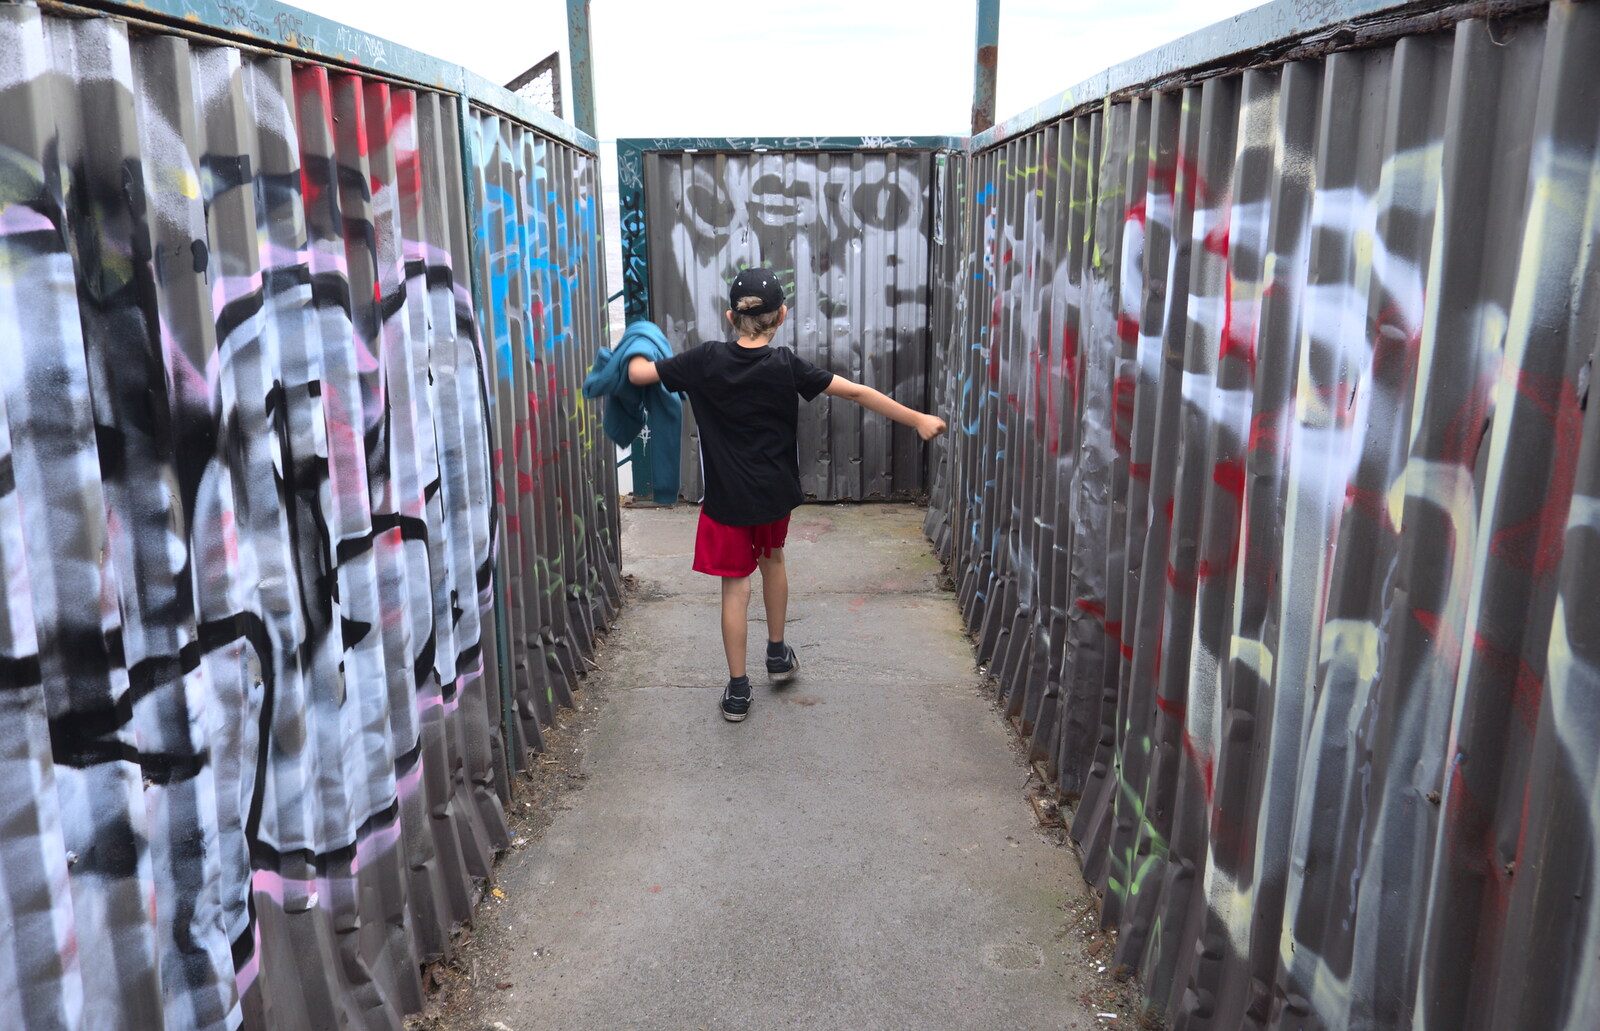 Fred on Graffiti Bridge, over the DART from A Trip to Da Gorls, Monkstown Farm, County Dublin, Ireland - 4th August 2018